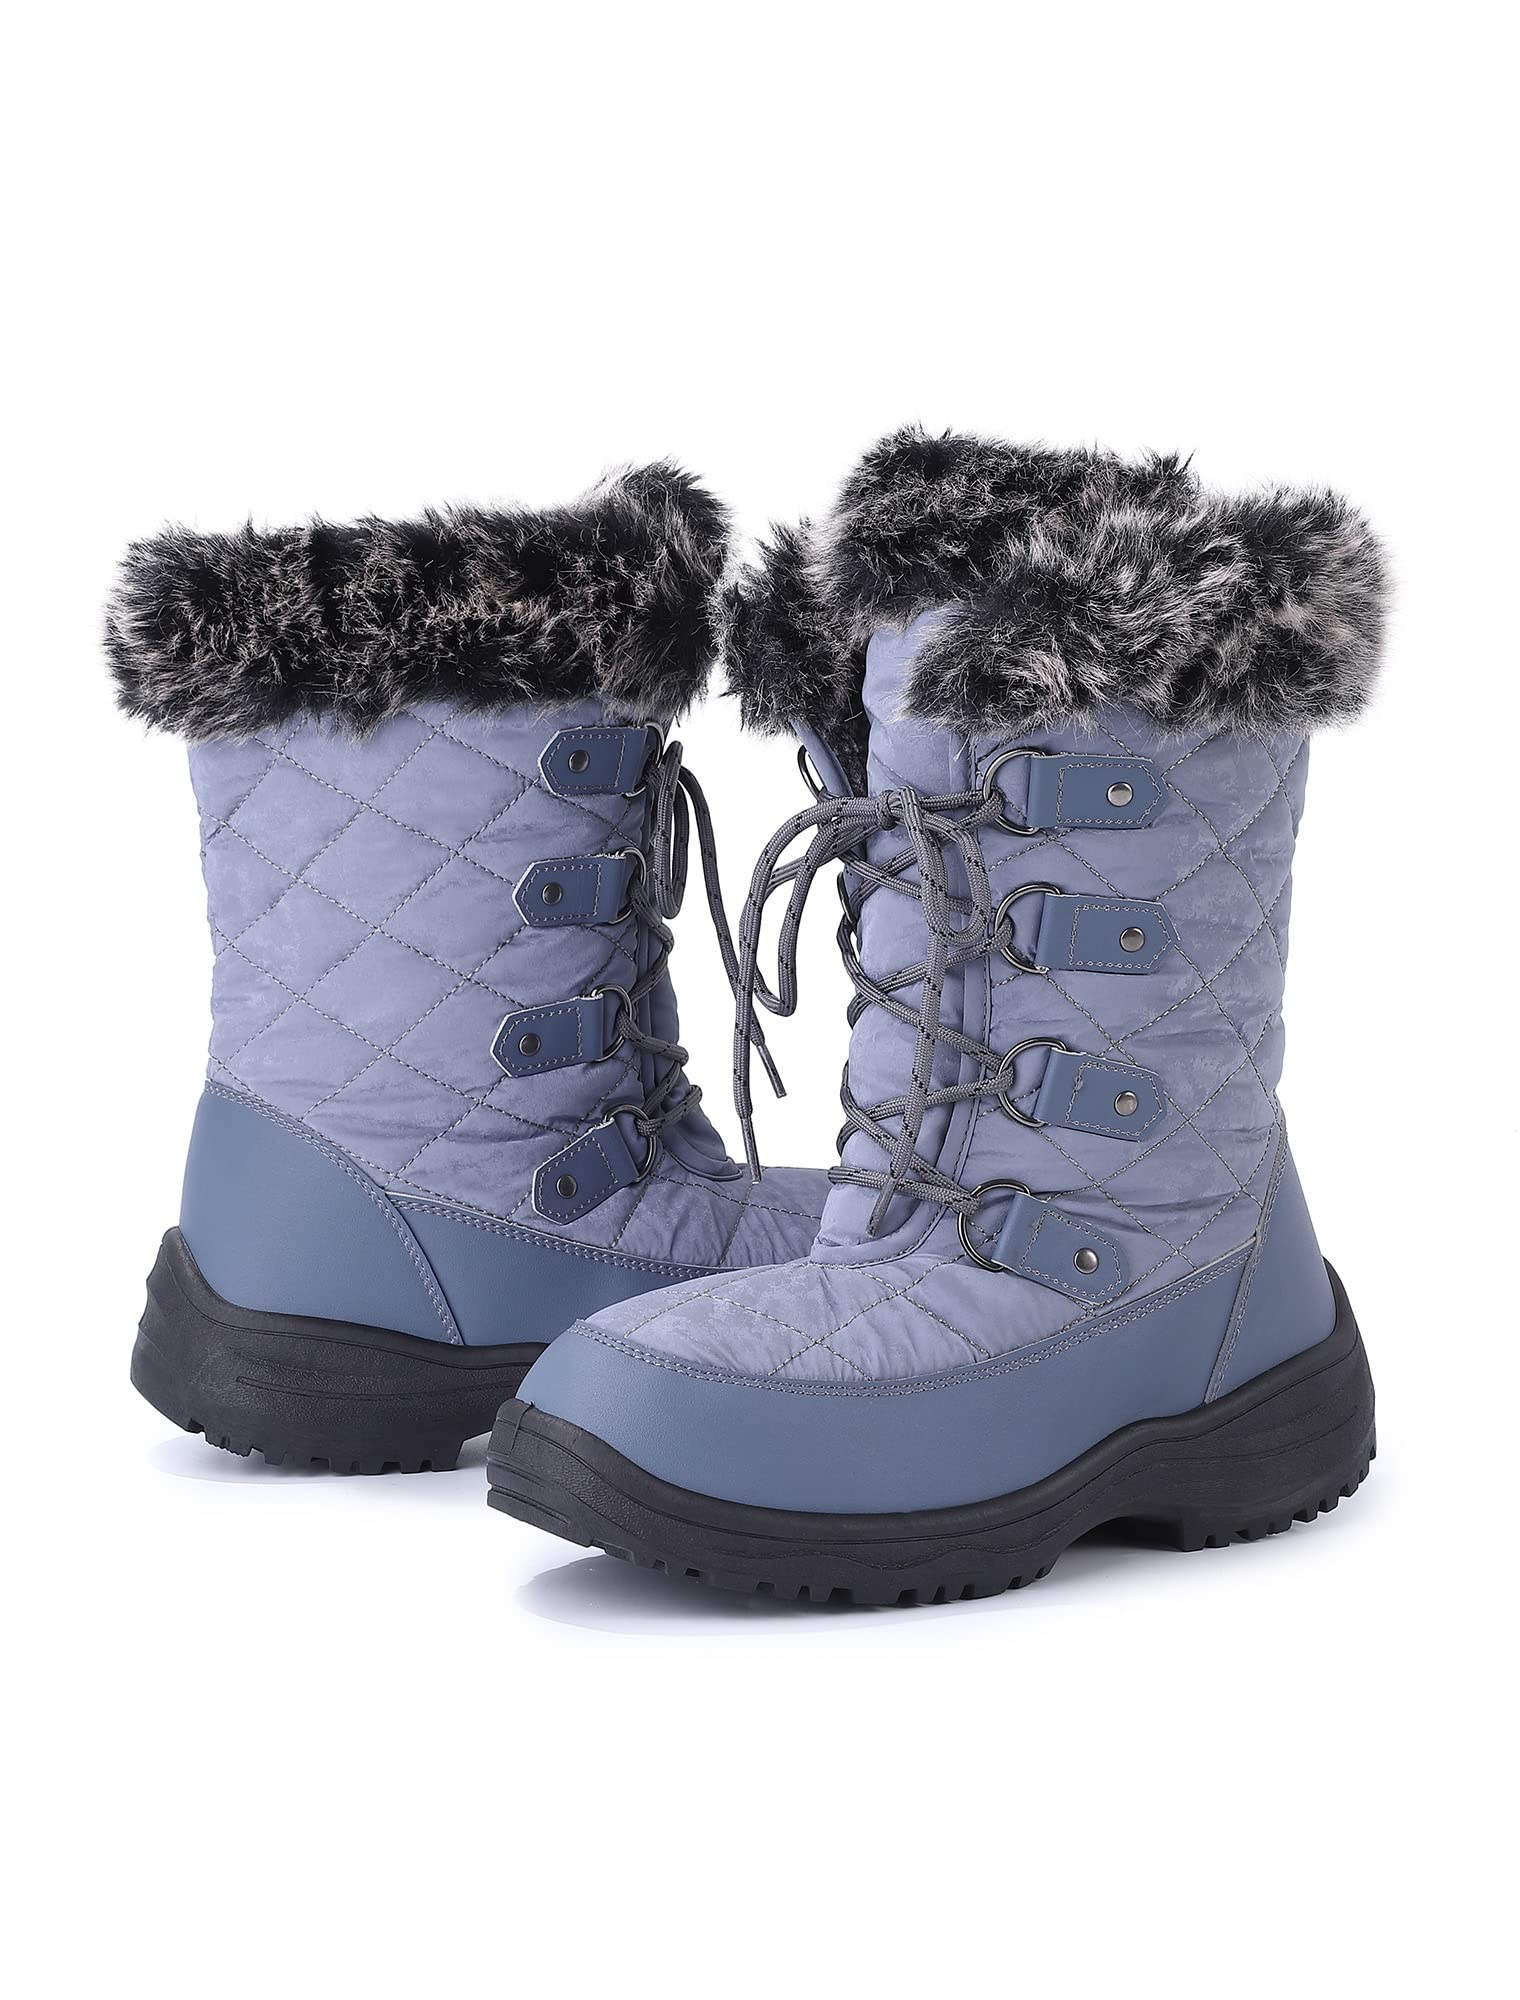 Women's Snow Shoes, Women Waterproof Mid Calf, Anti-slip Outdoor Warm ...